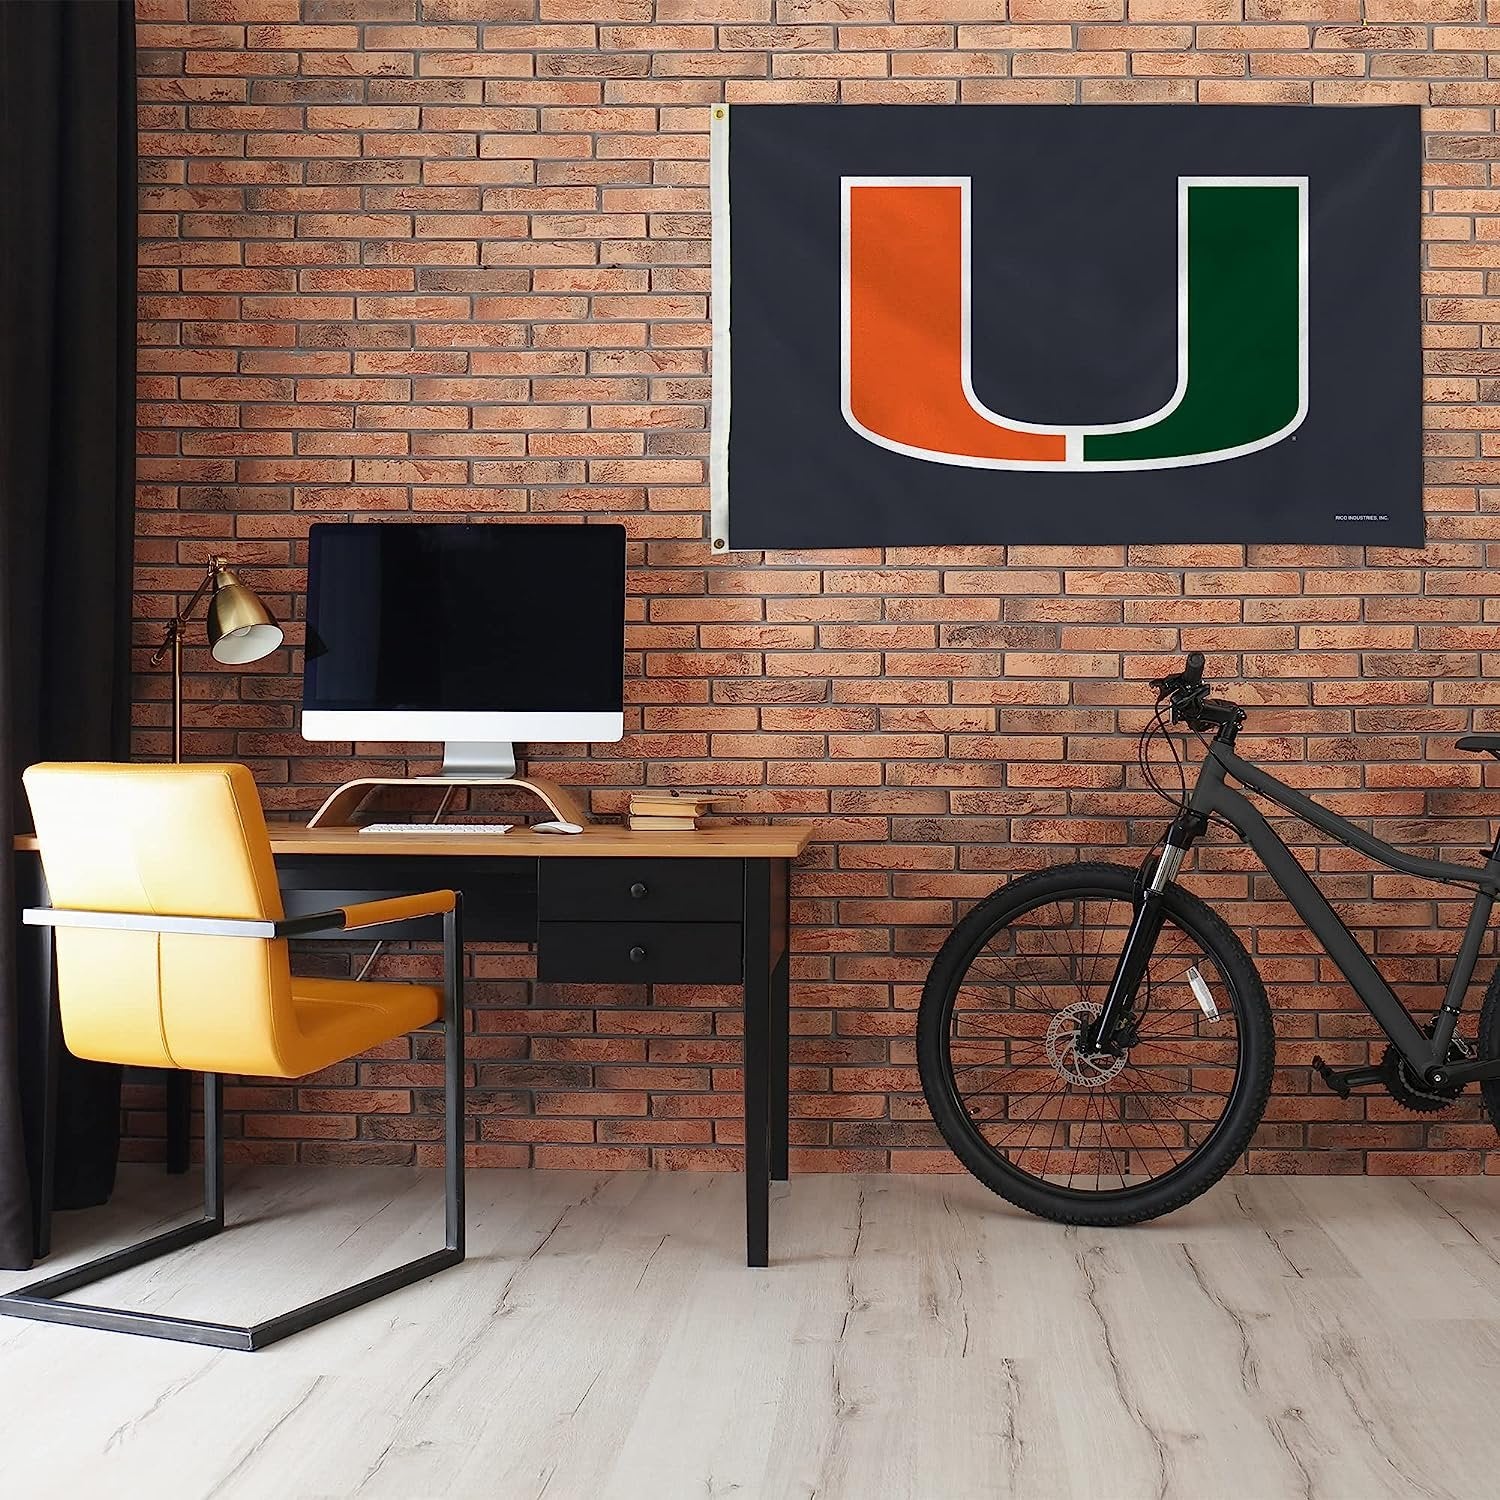 University of Miami Hurricanes Flag Banner 3x5 Feet Metal Grommets Grey Design